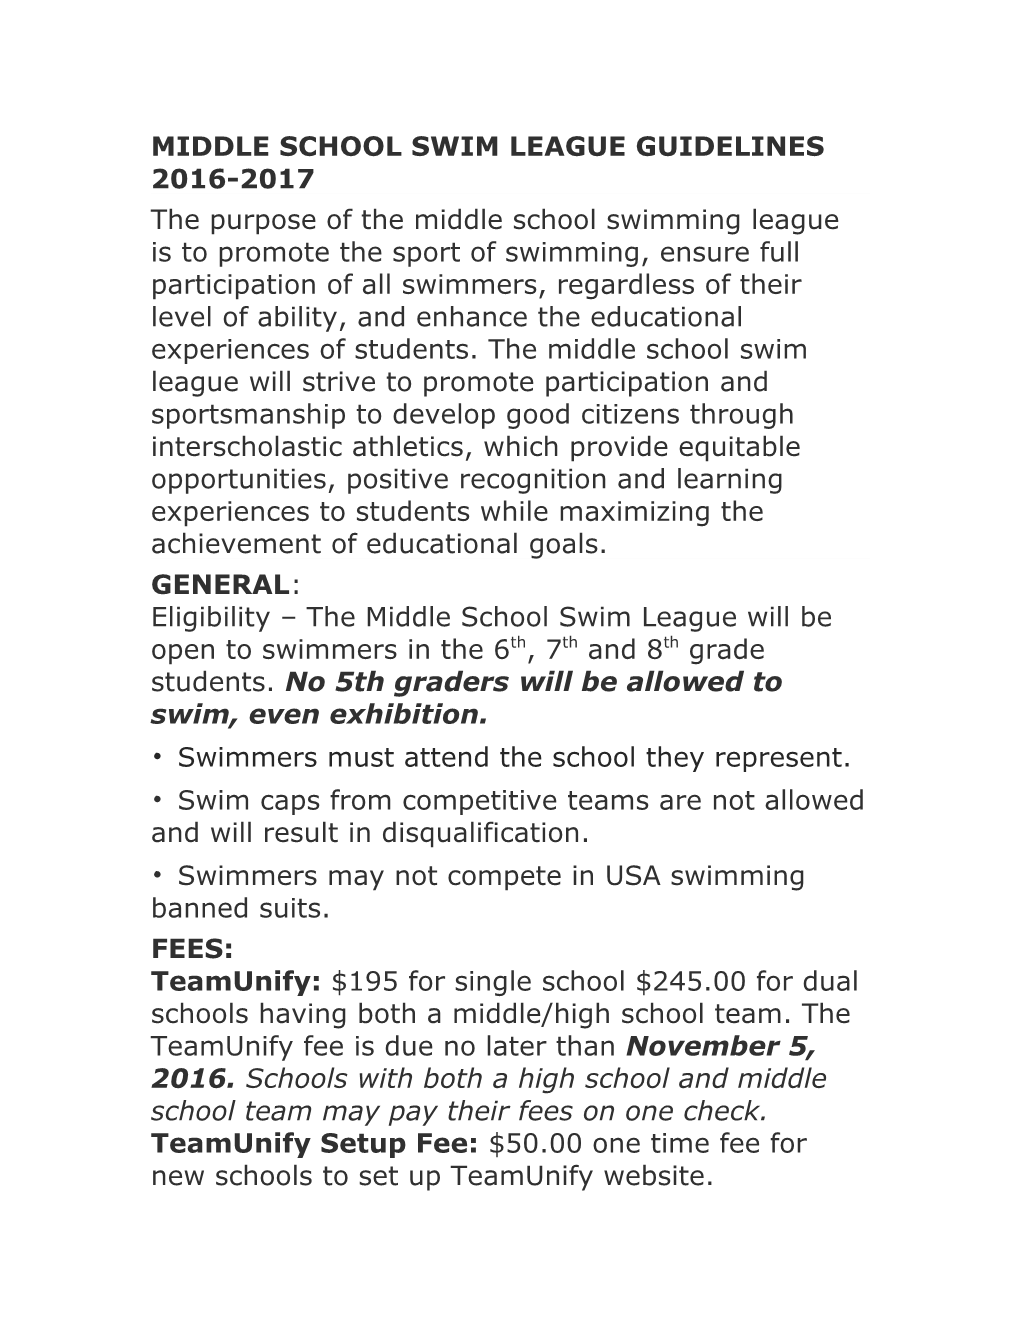 Middle School Swim League Guidelines 2016-2017